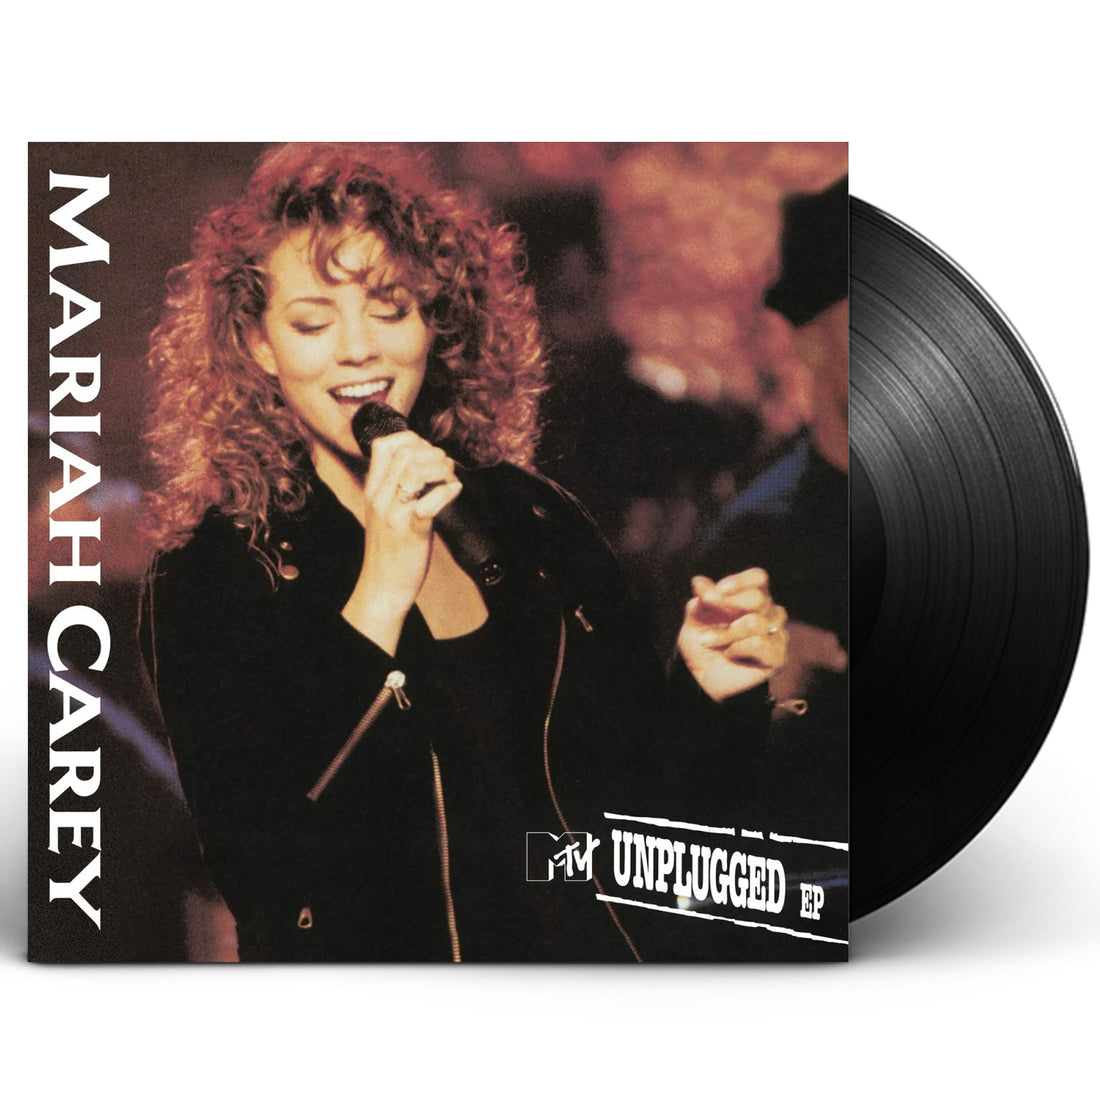 Mariah Carey "MTV Unplugged" LP Vinyl